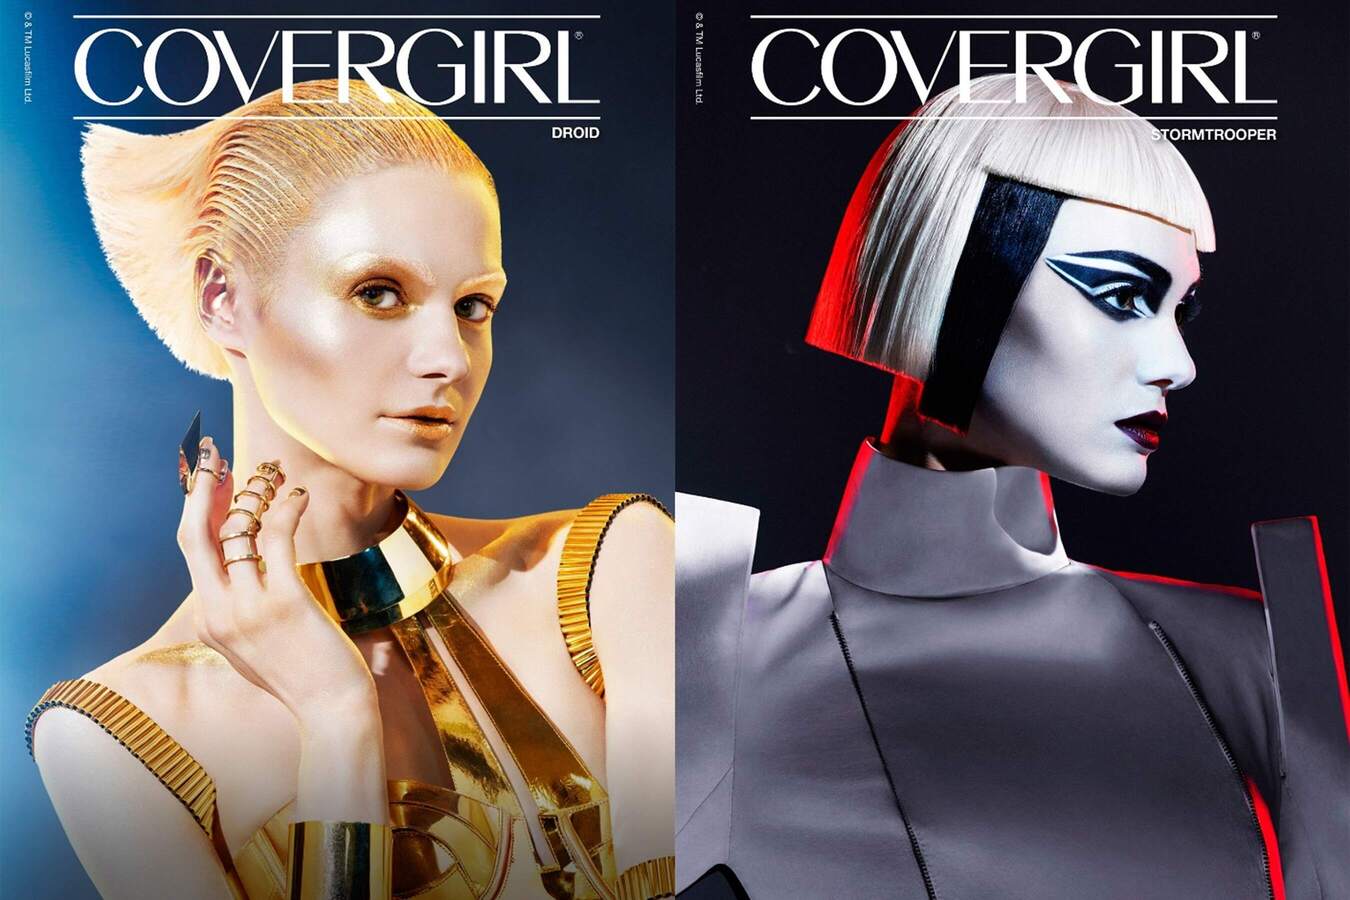 Covergirl Star Wars Collaboration: Light side and dark side makeup